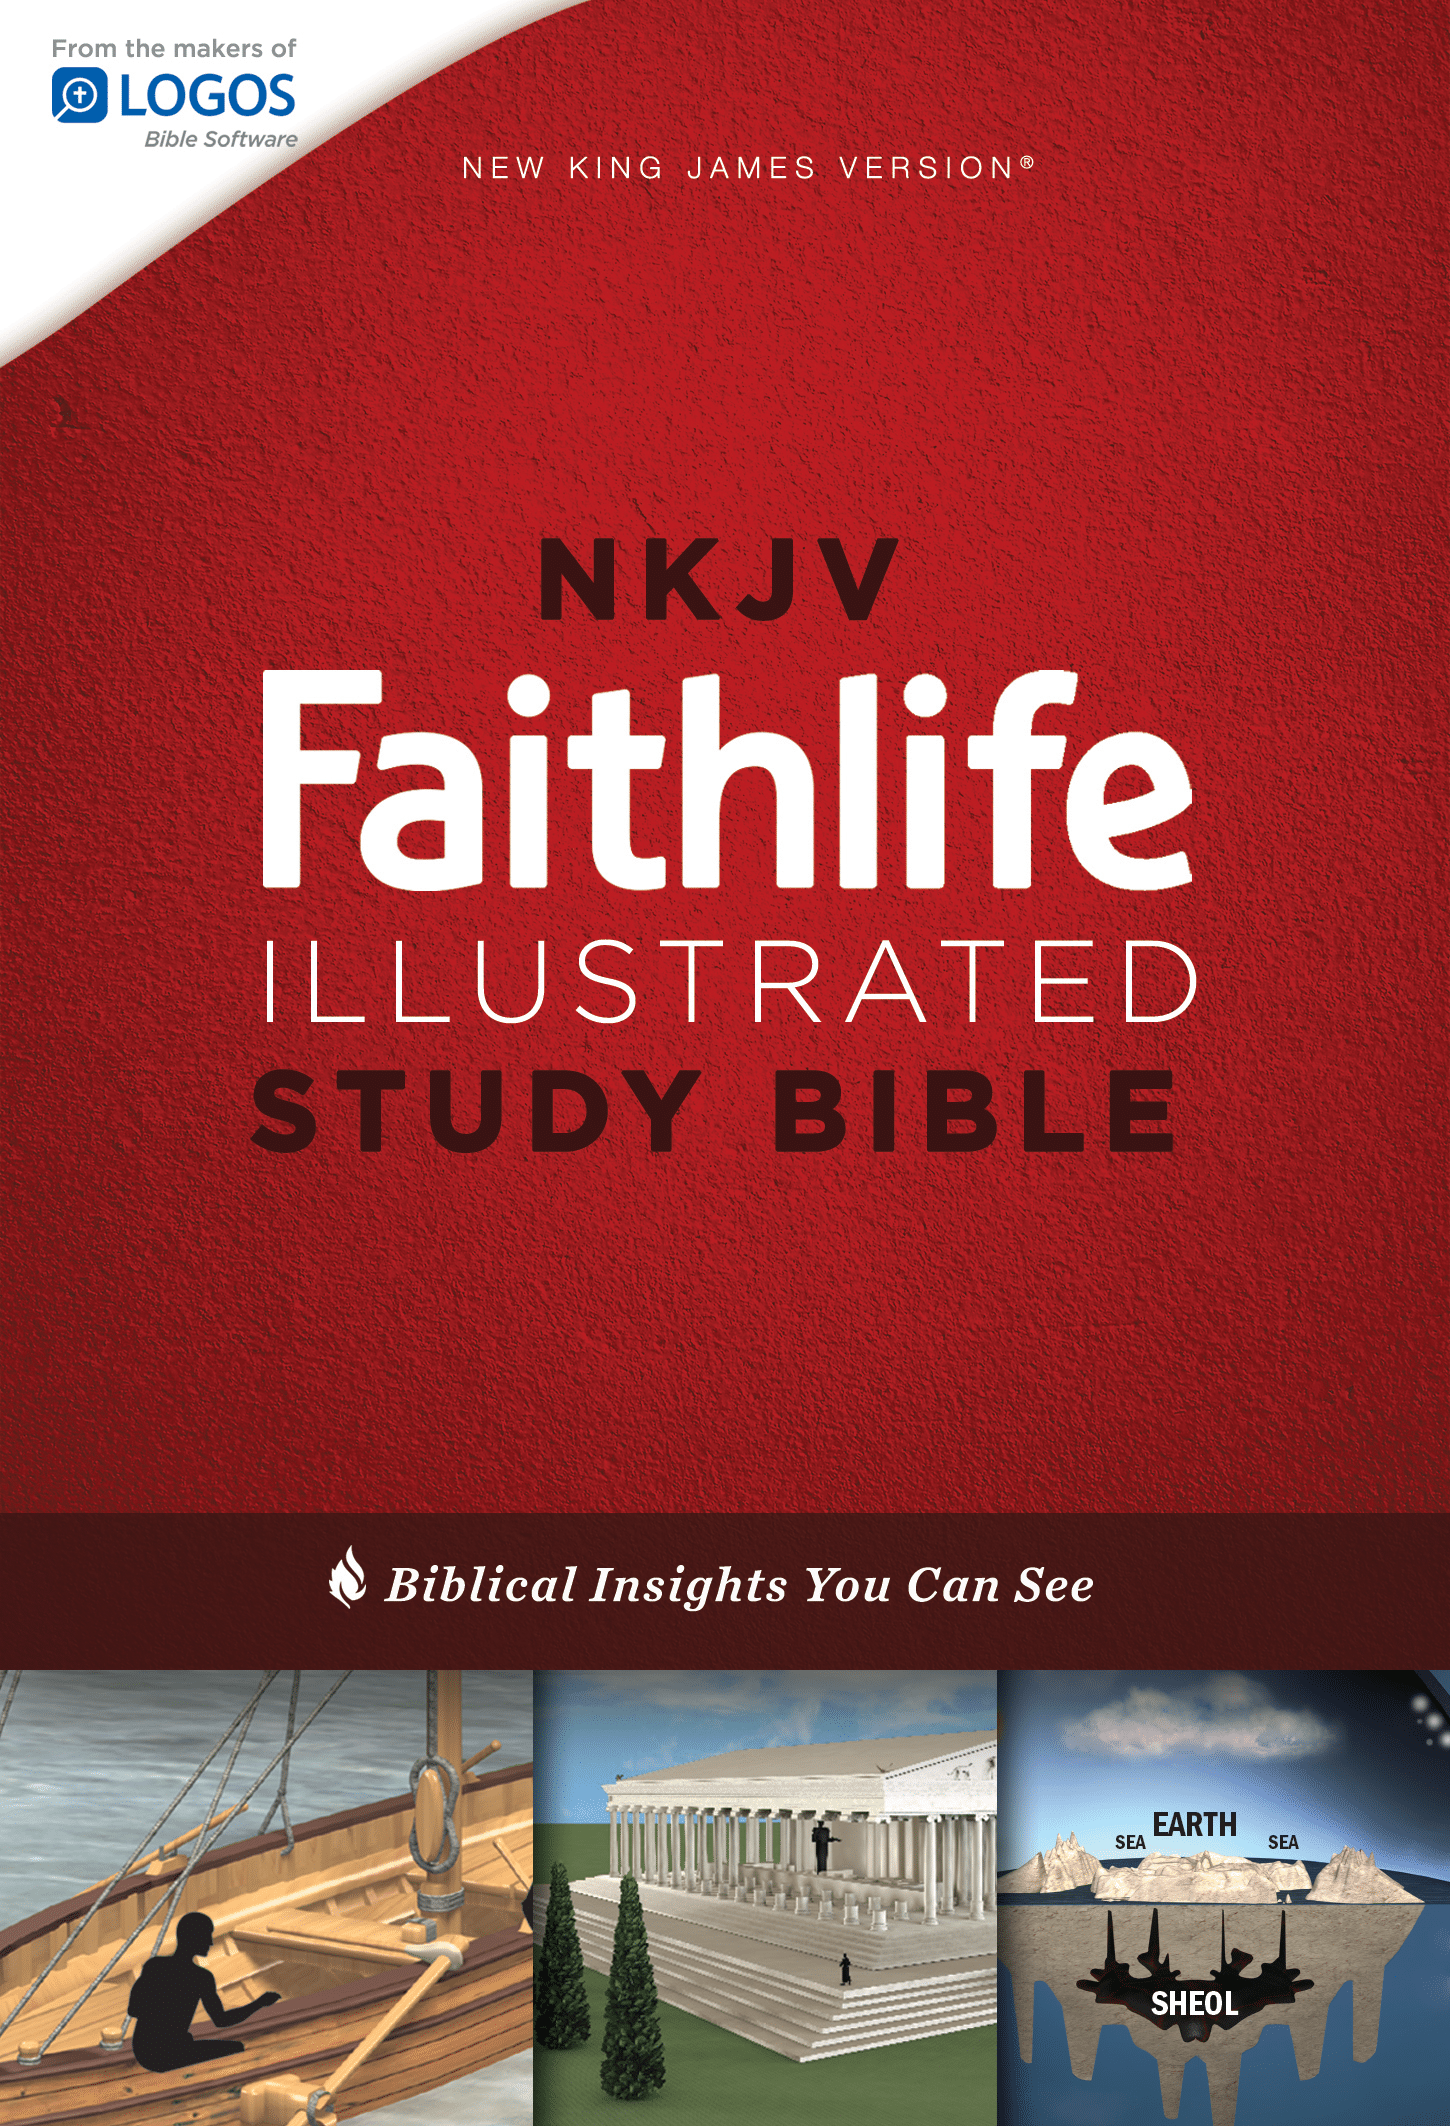 Nkjv Faithlife Illustrated Study Bible Logos Bible Software